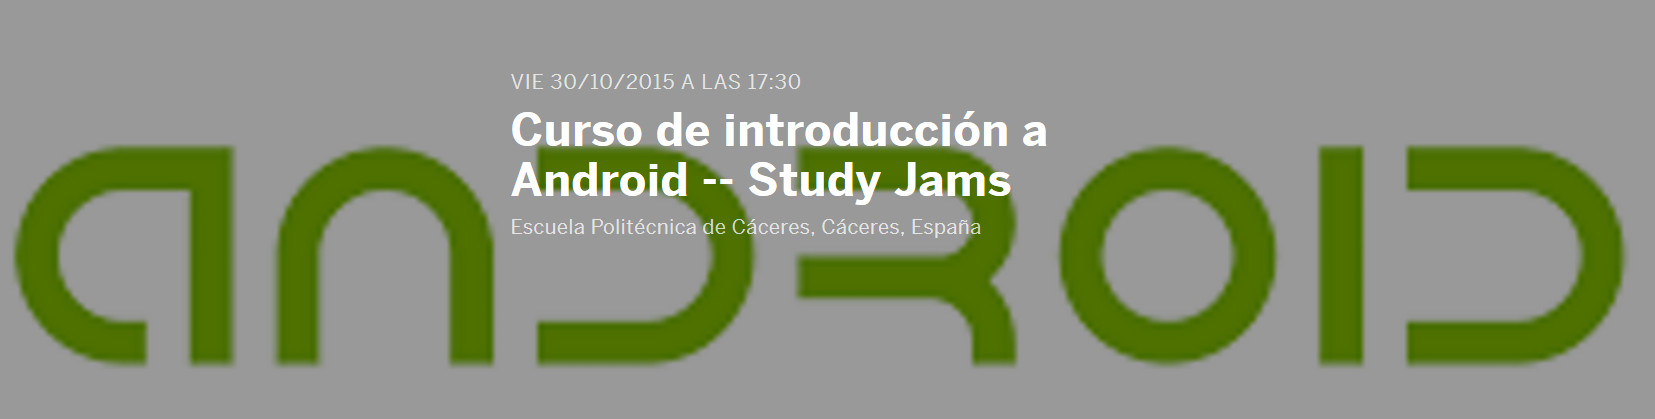 Curso de introducción a Android -- Study Jams